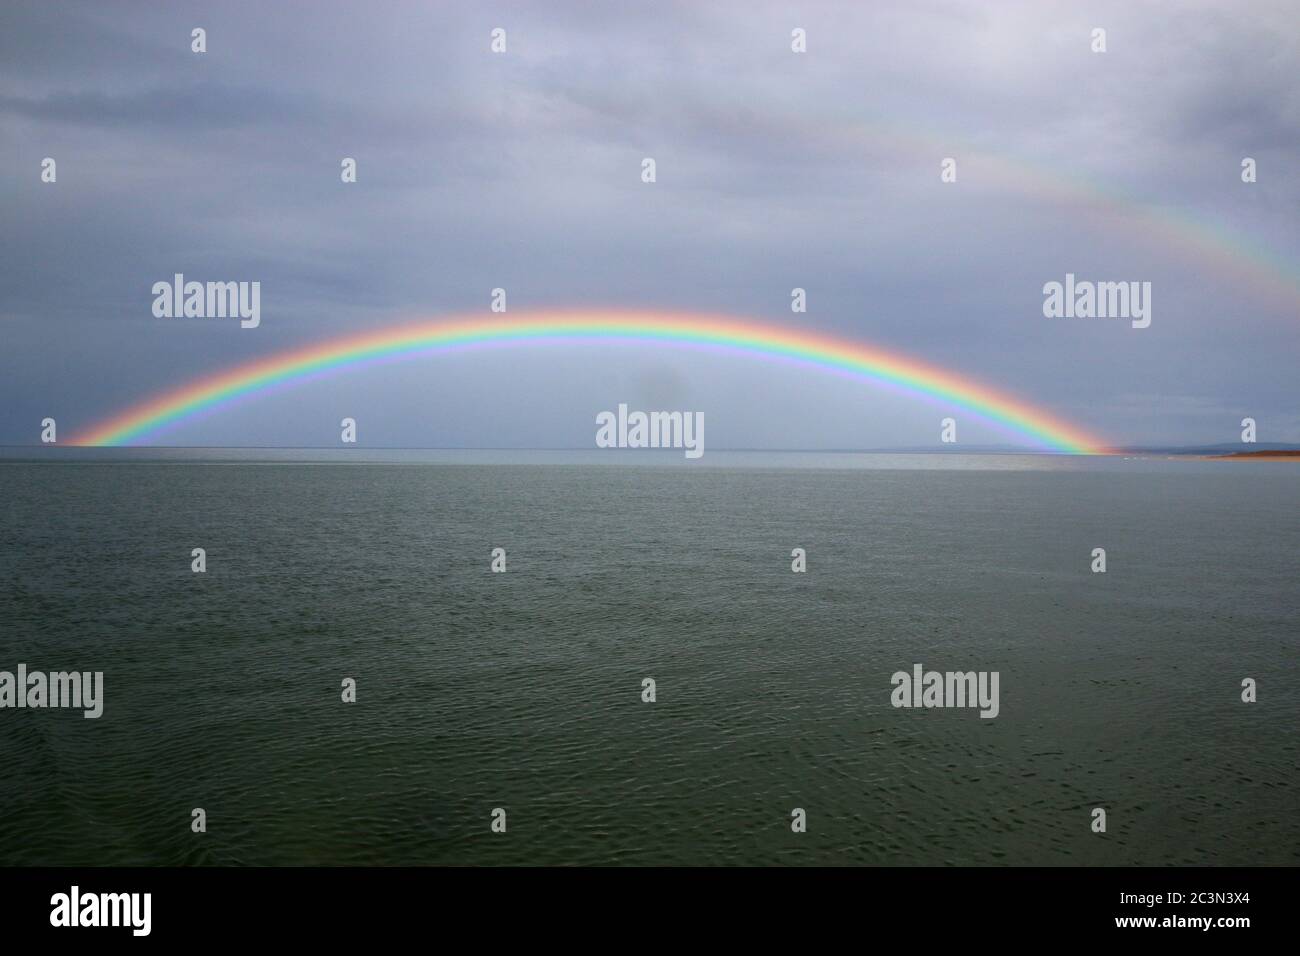 Full rainbow over the sea Stock Photo